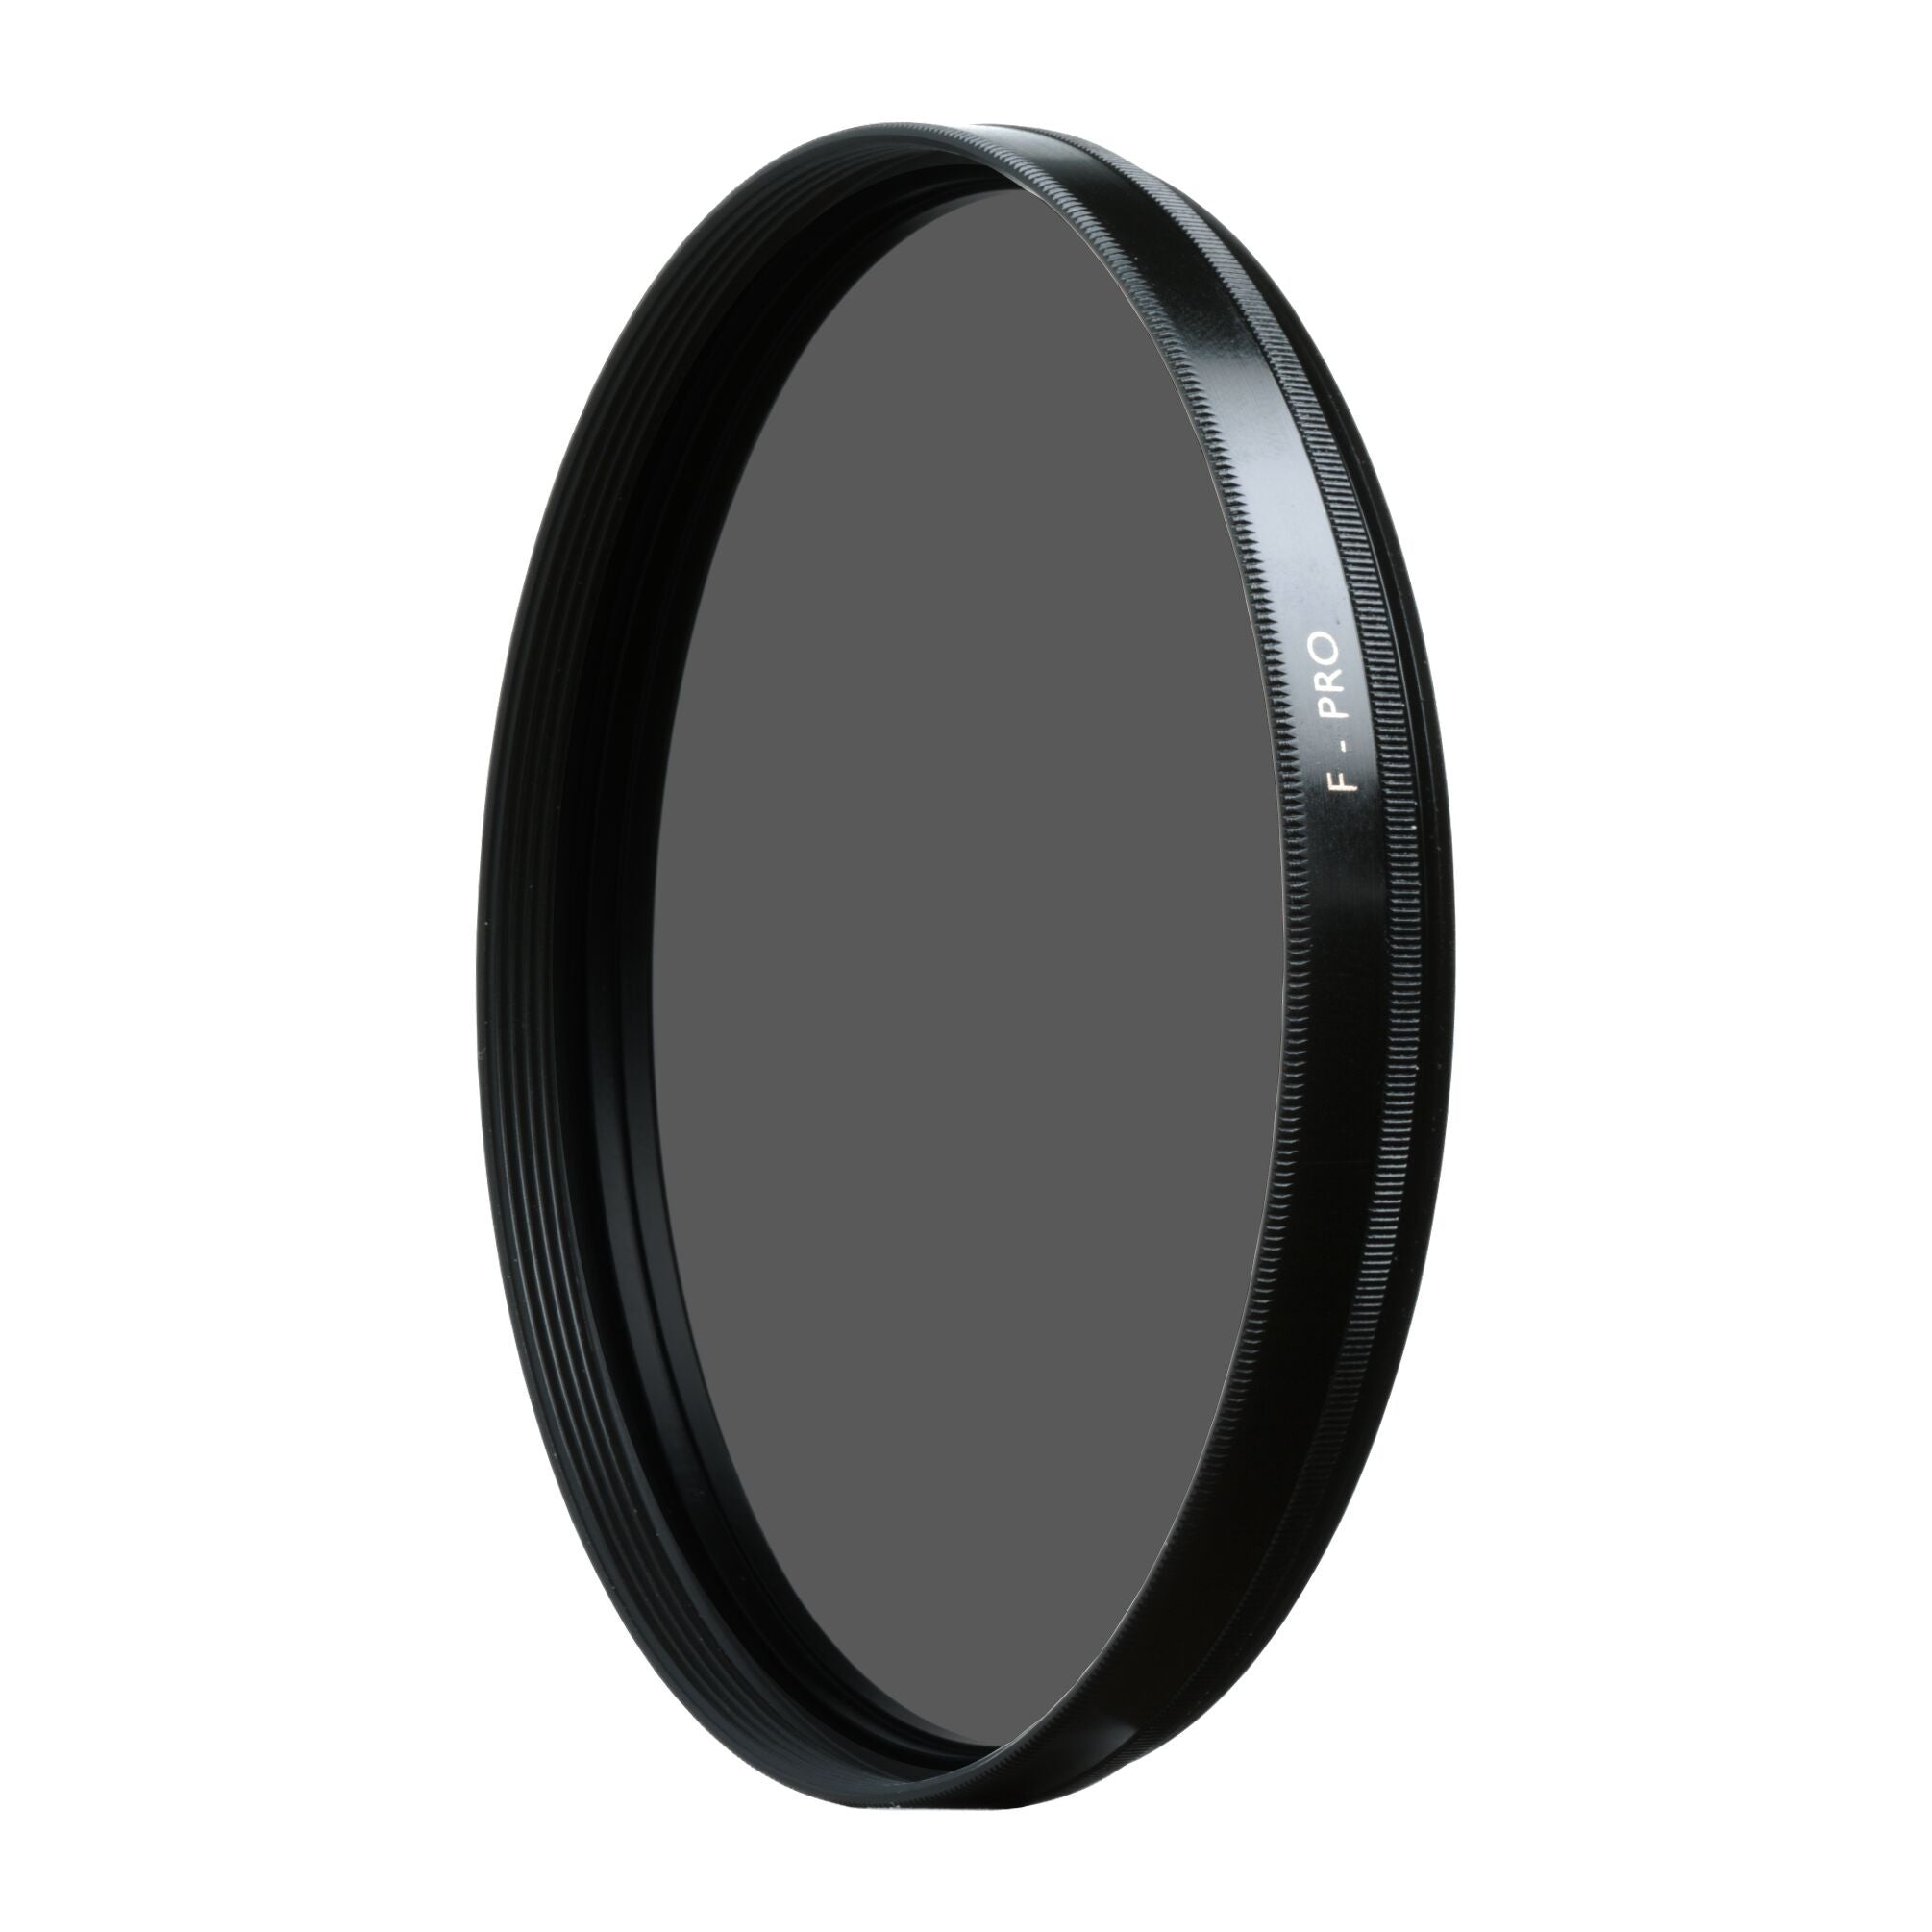 B+W 58mm Circular Polarizer Filter, lenses filters polarizer, B+W - Pictureline 